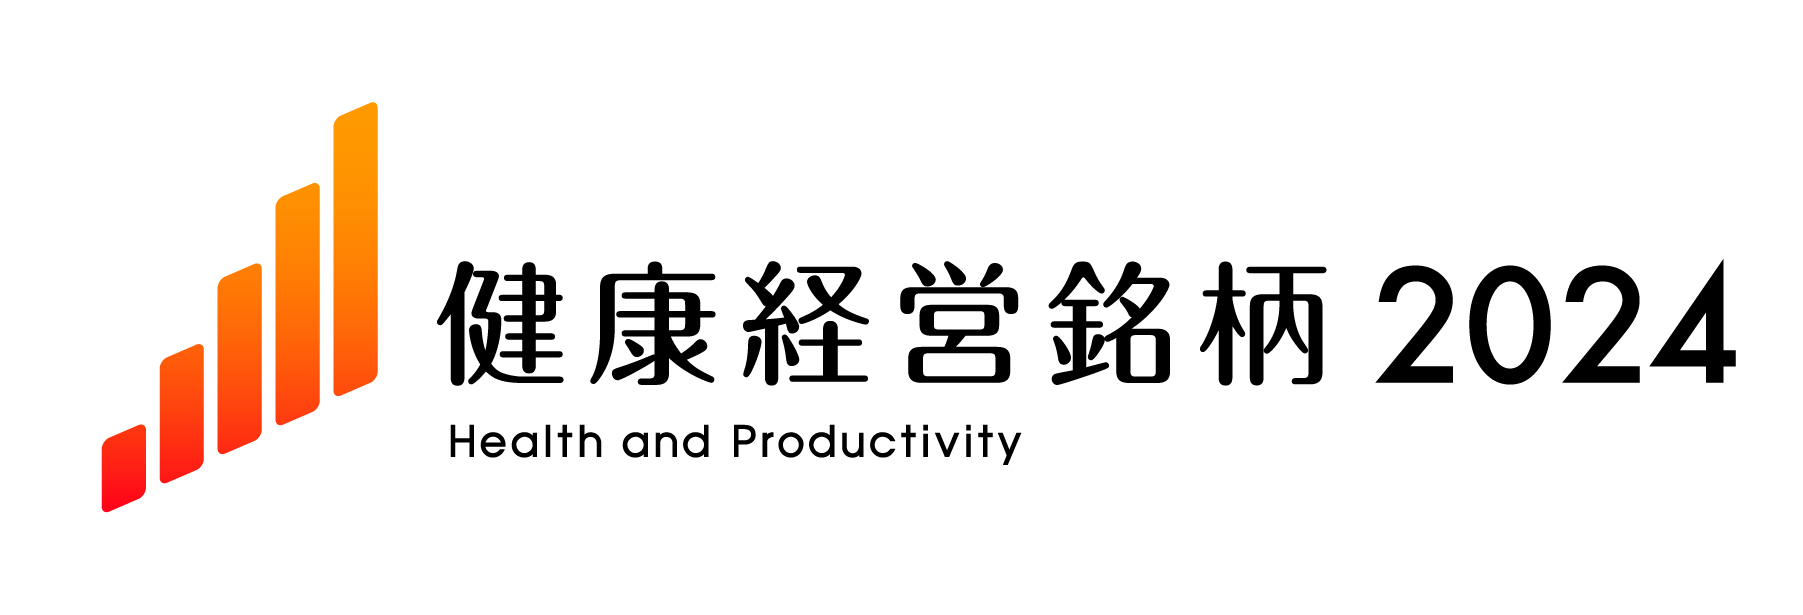 “Health Management Stock 2024” logo